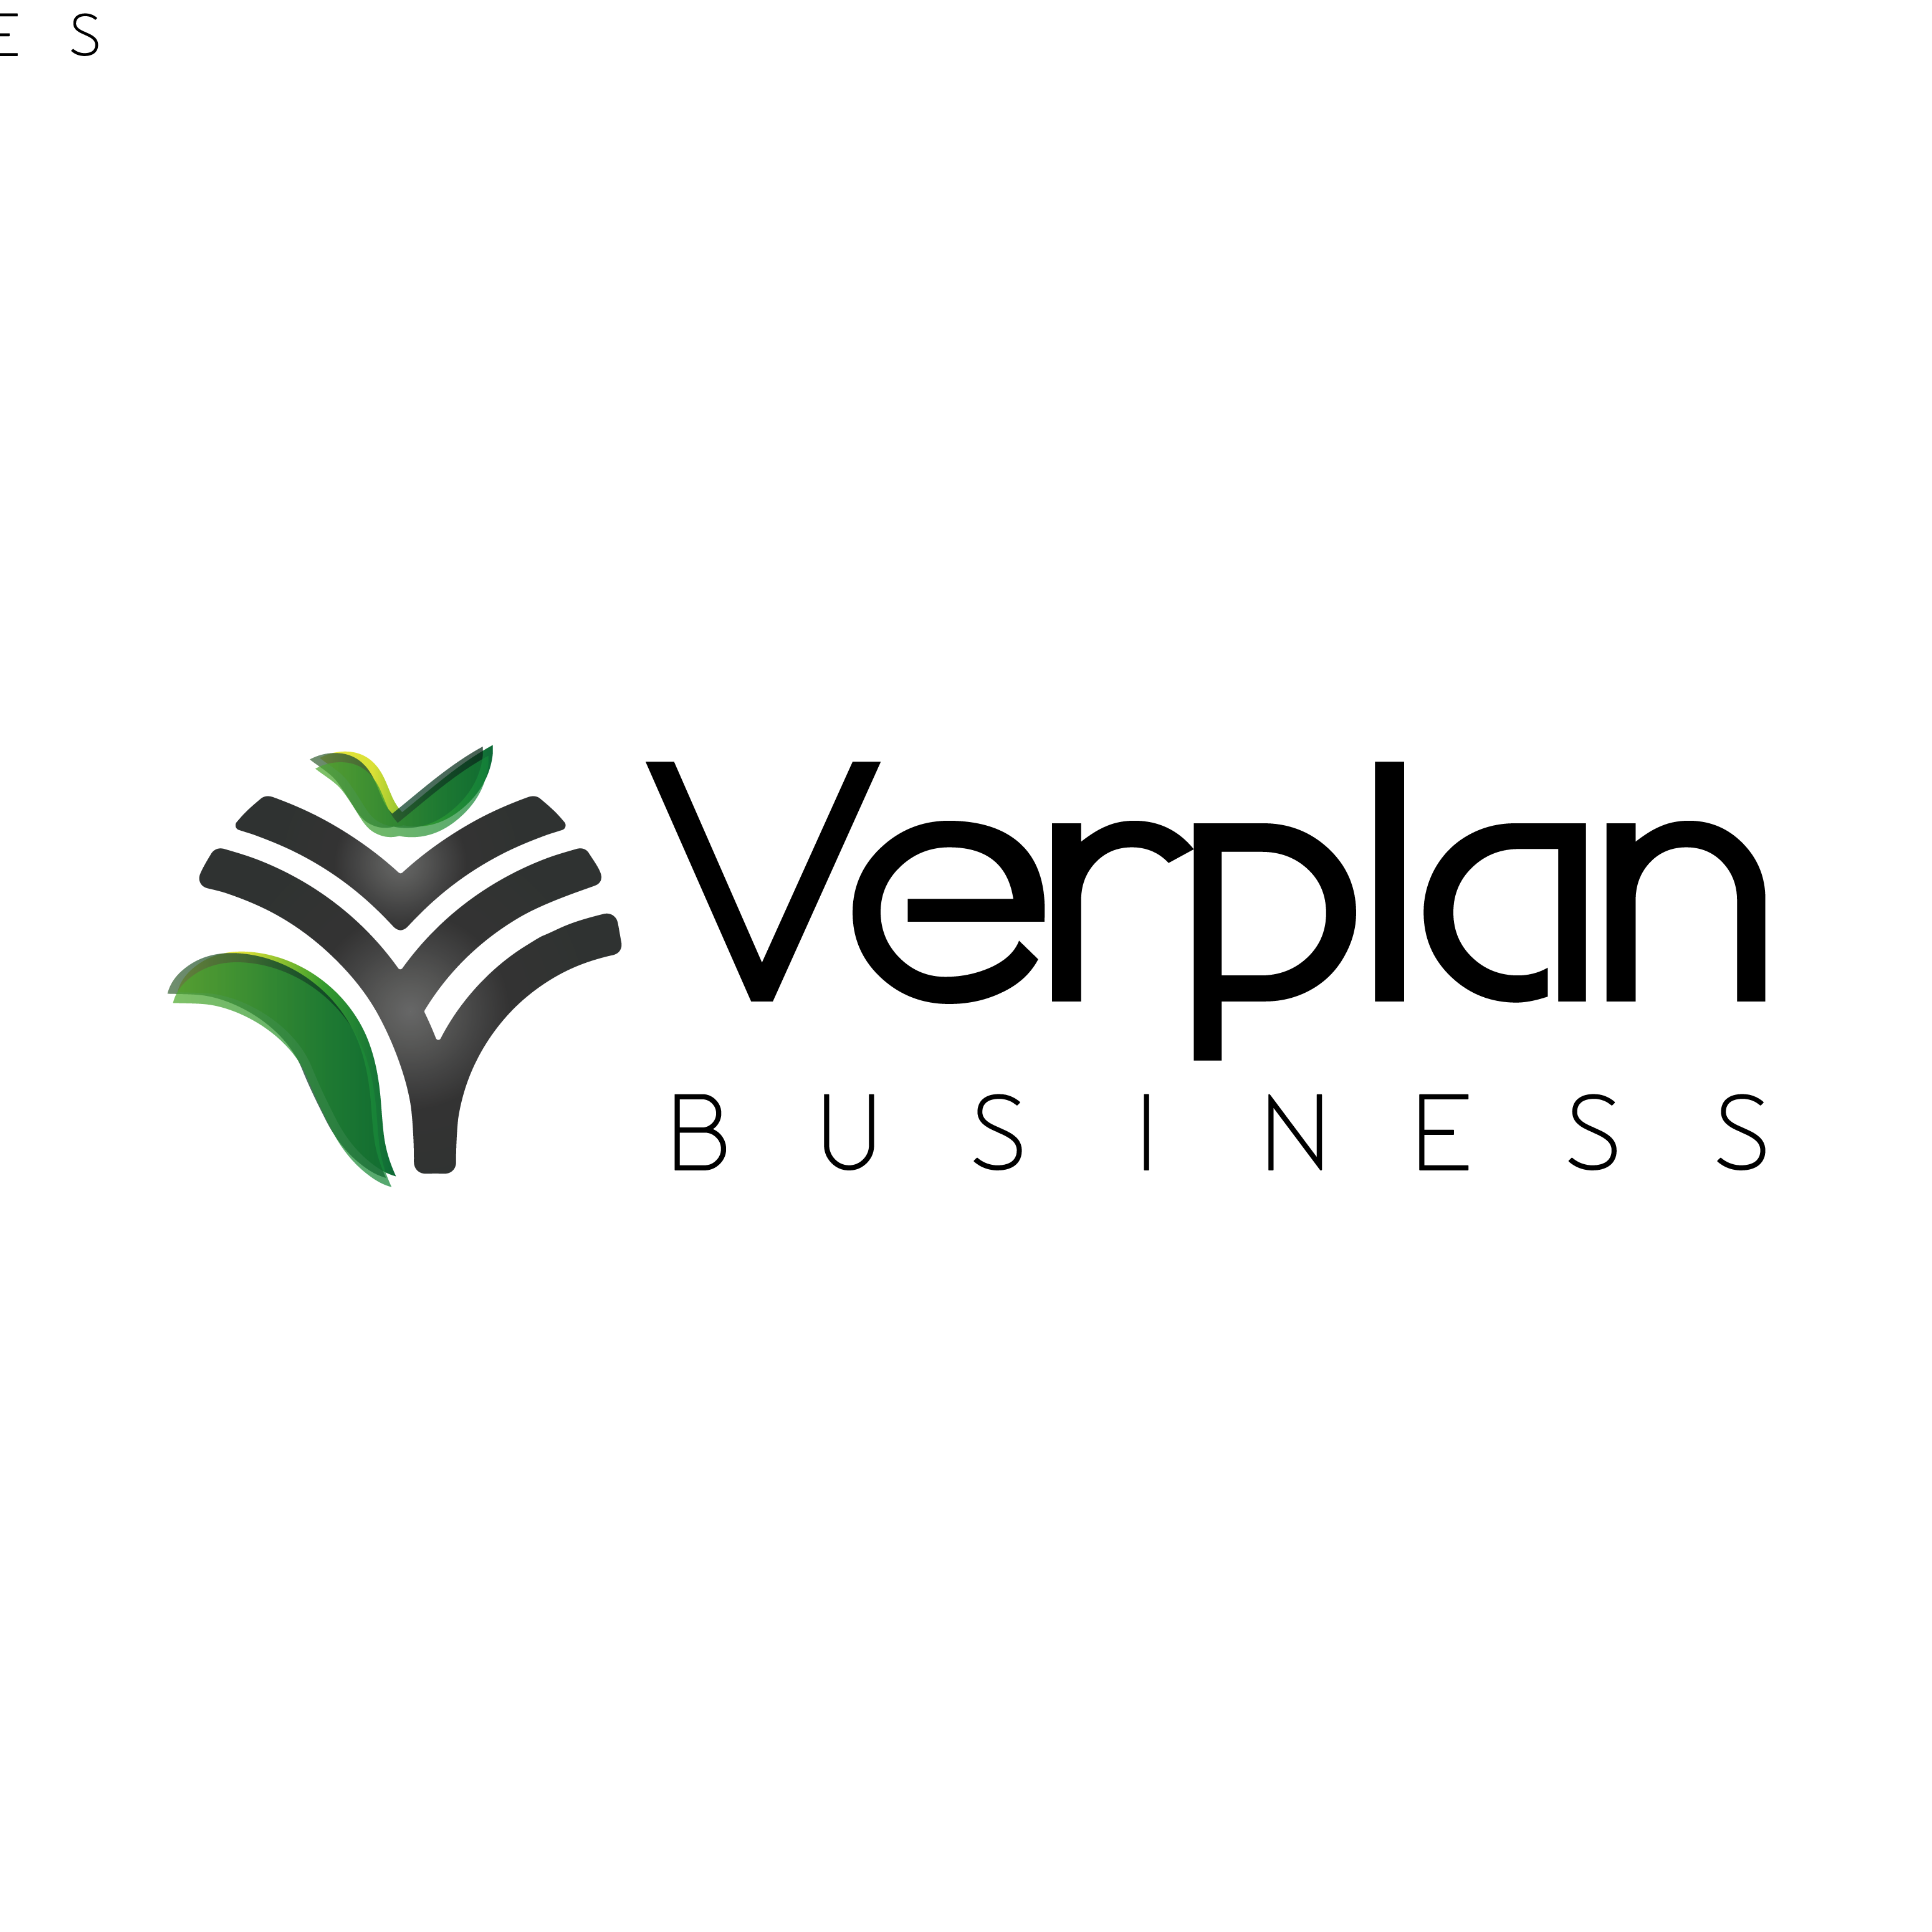 Verplan Business